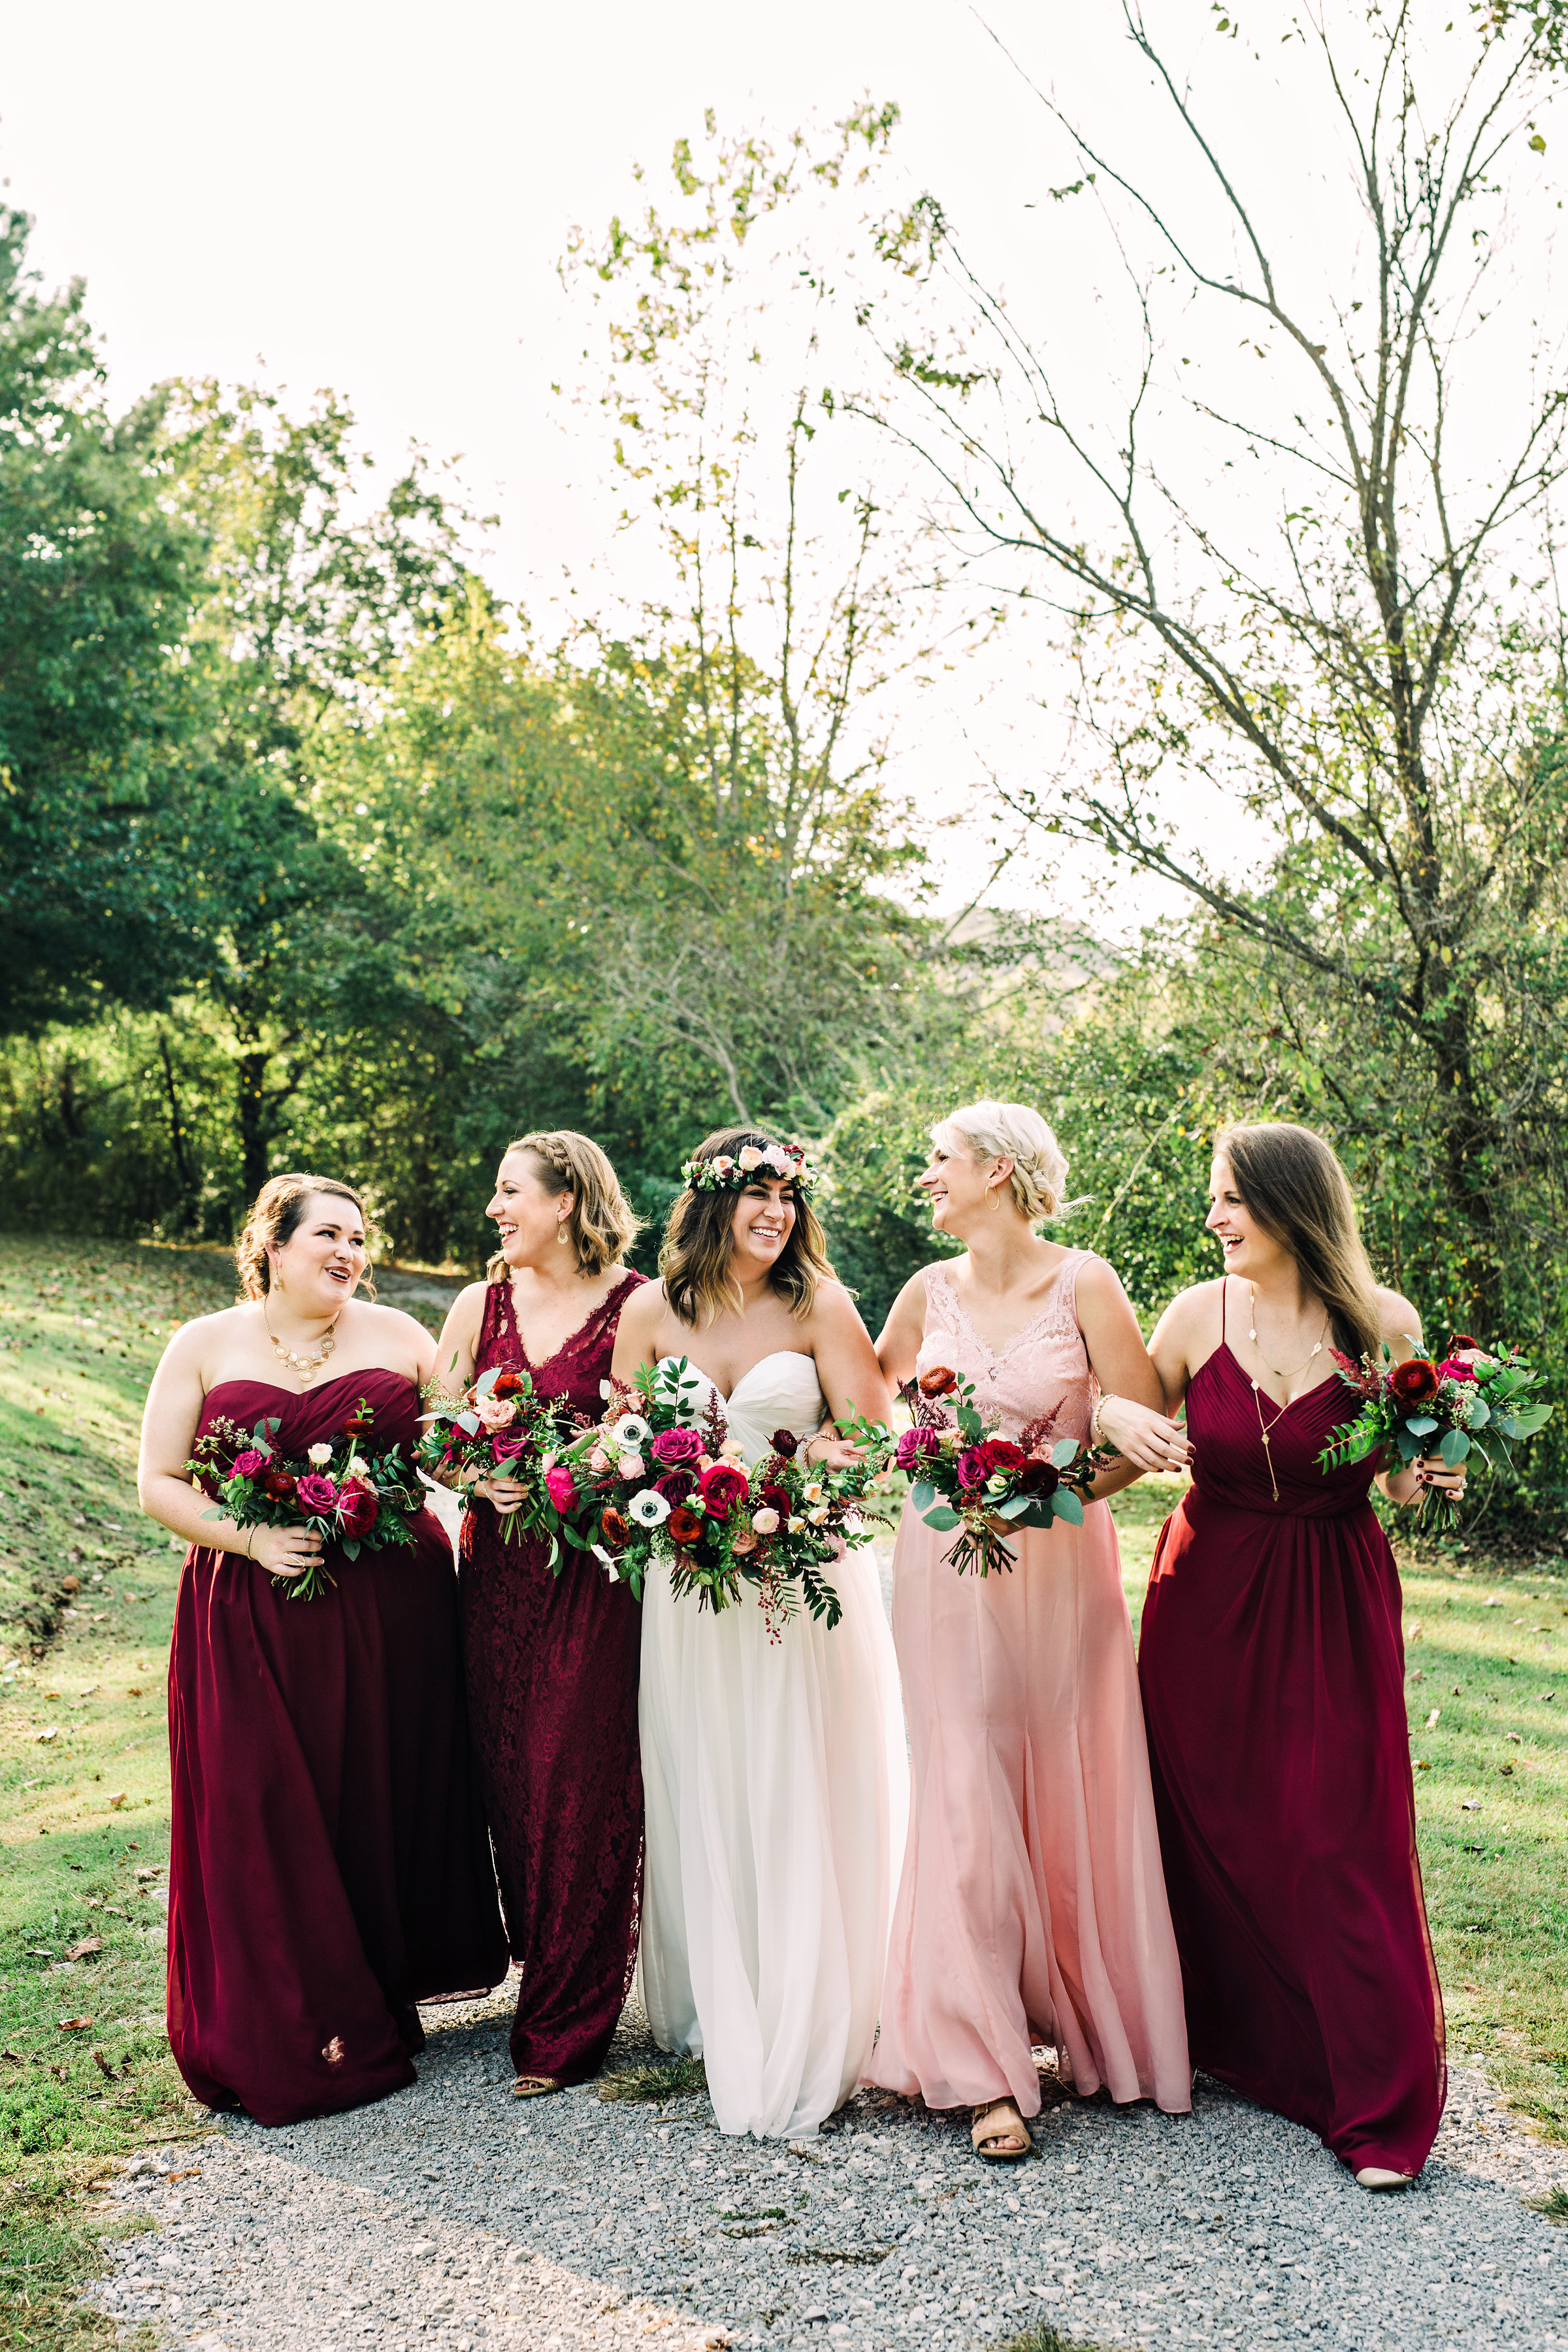 Bridesmaids in burgundy and blush // Meadow Hill Farm Wedding Flowers